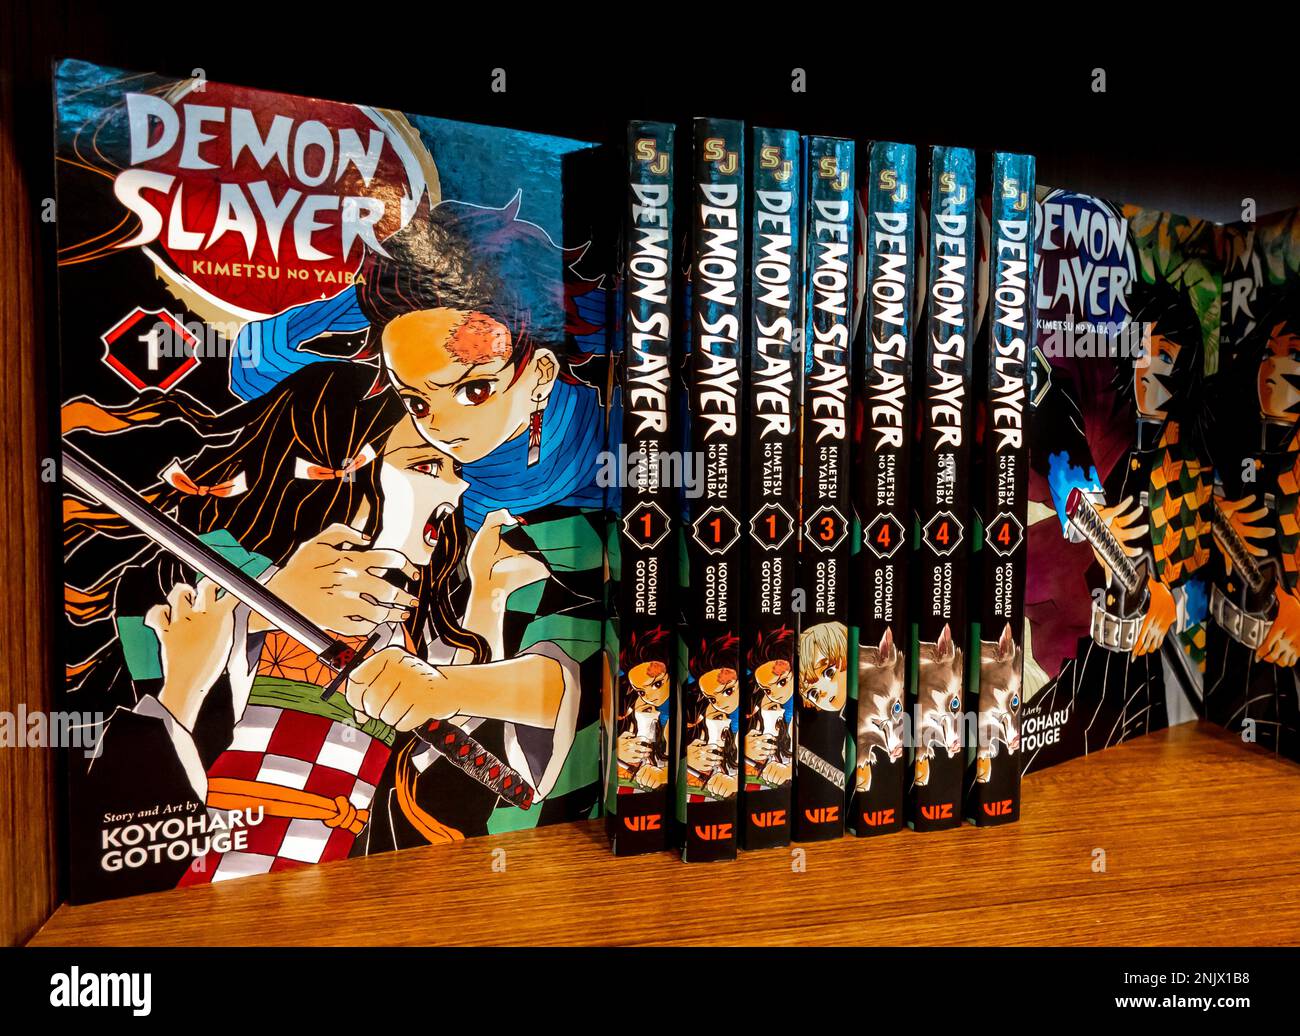 https://c8.alamy.com/comp/2NJX1B8/demon-slayer-kimetsu-no-yaiba-manga-series-books-on-a-shelf-2NJX1B8.jpg